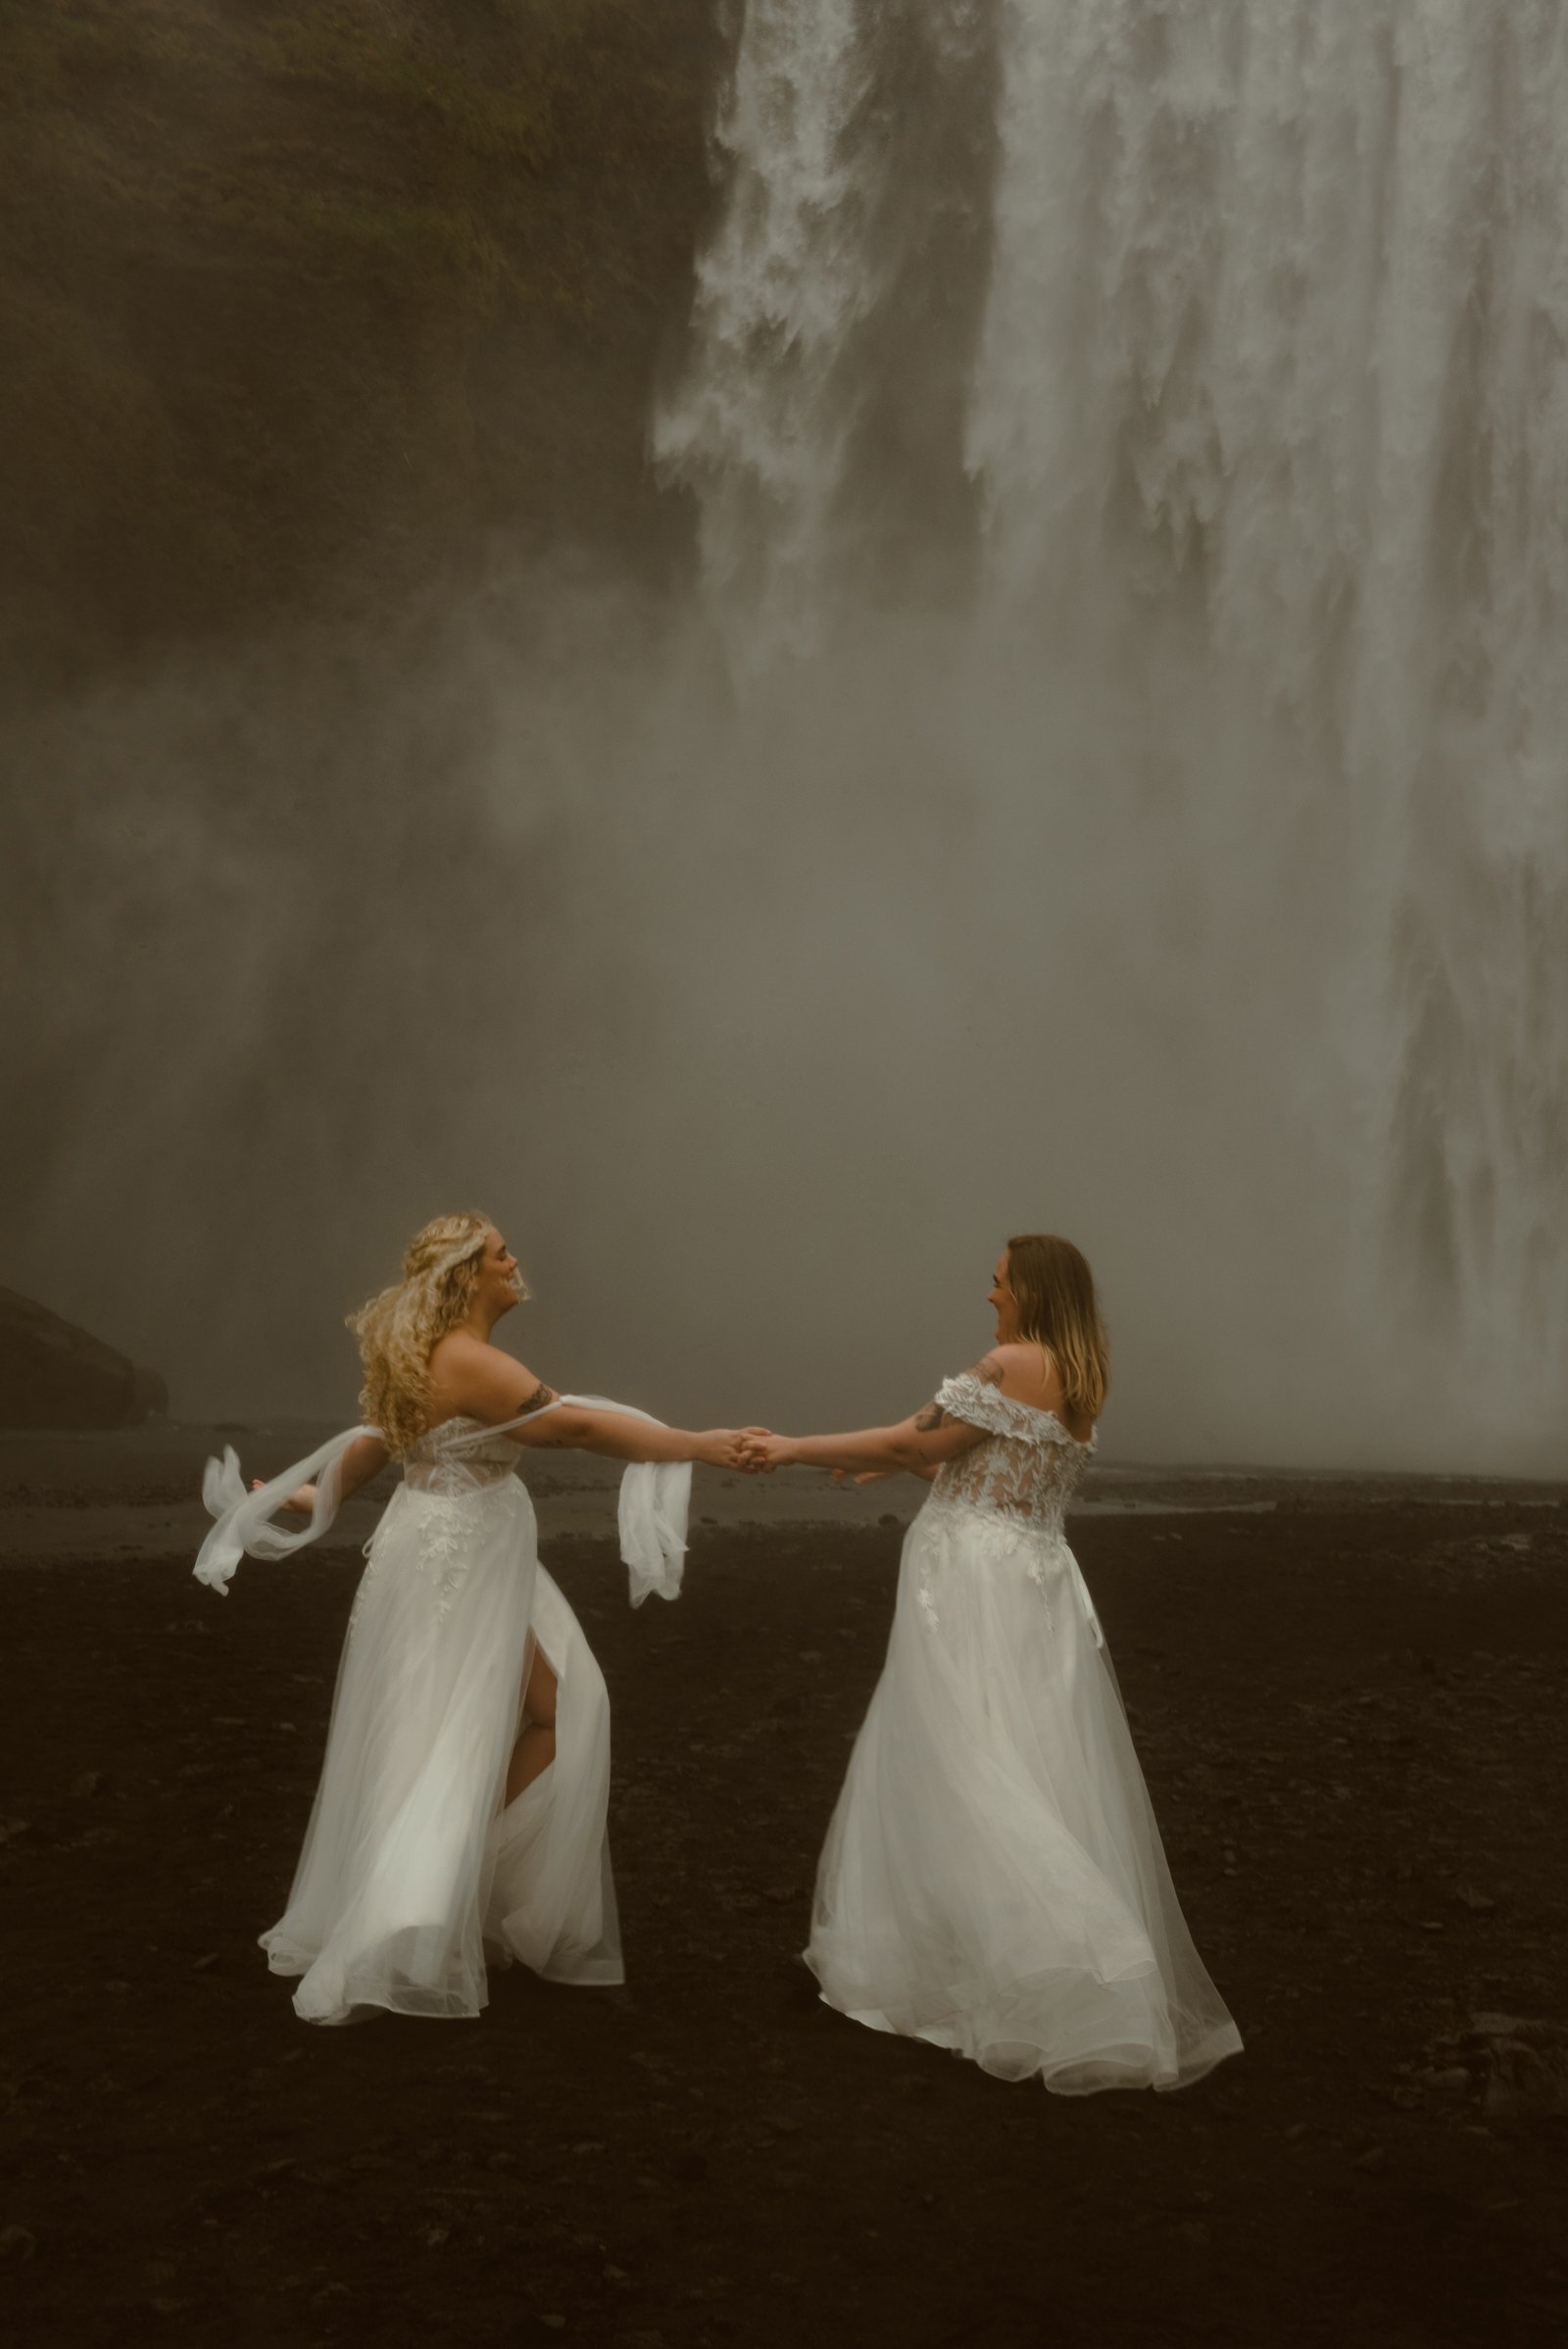 Iceland-Elopement-Photographer-Samantha-Joy-Photo-Destination-Elopement-Photographer (34 of 55) - Copy.jpg